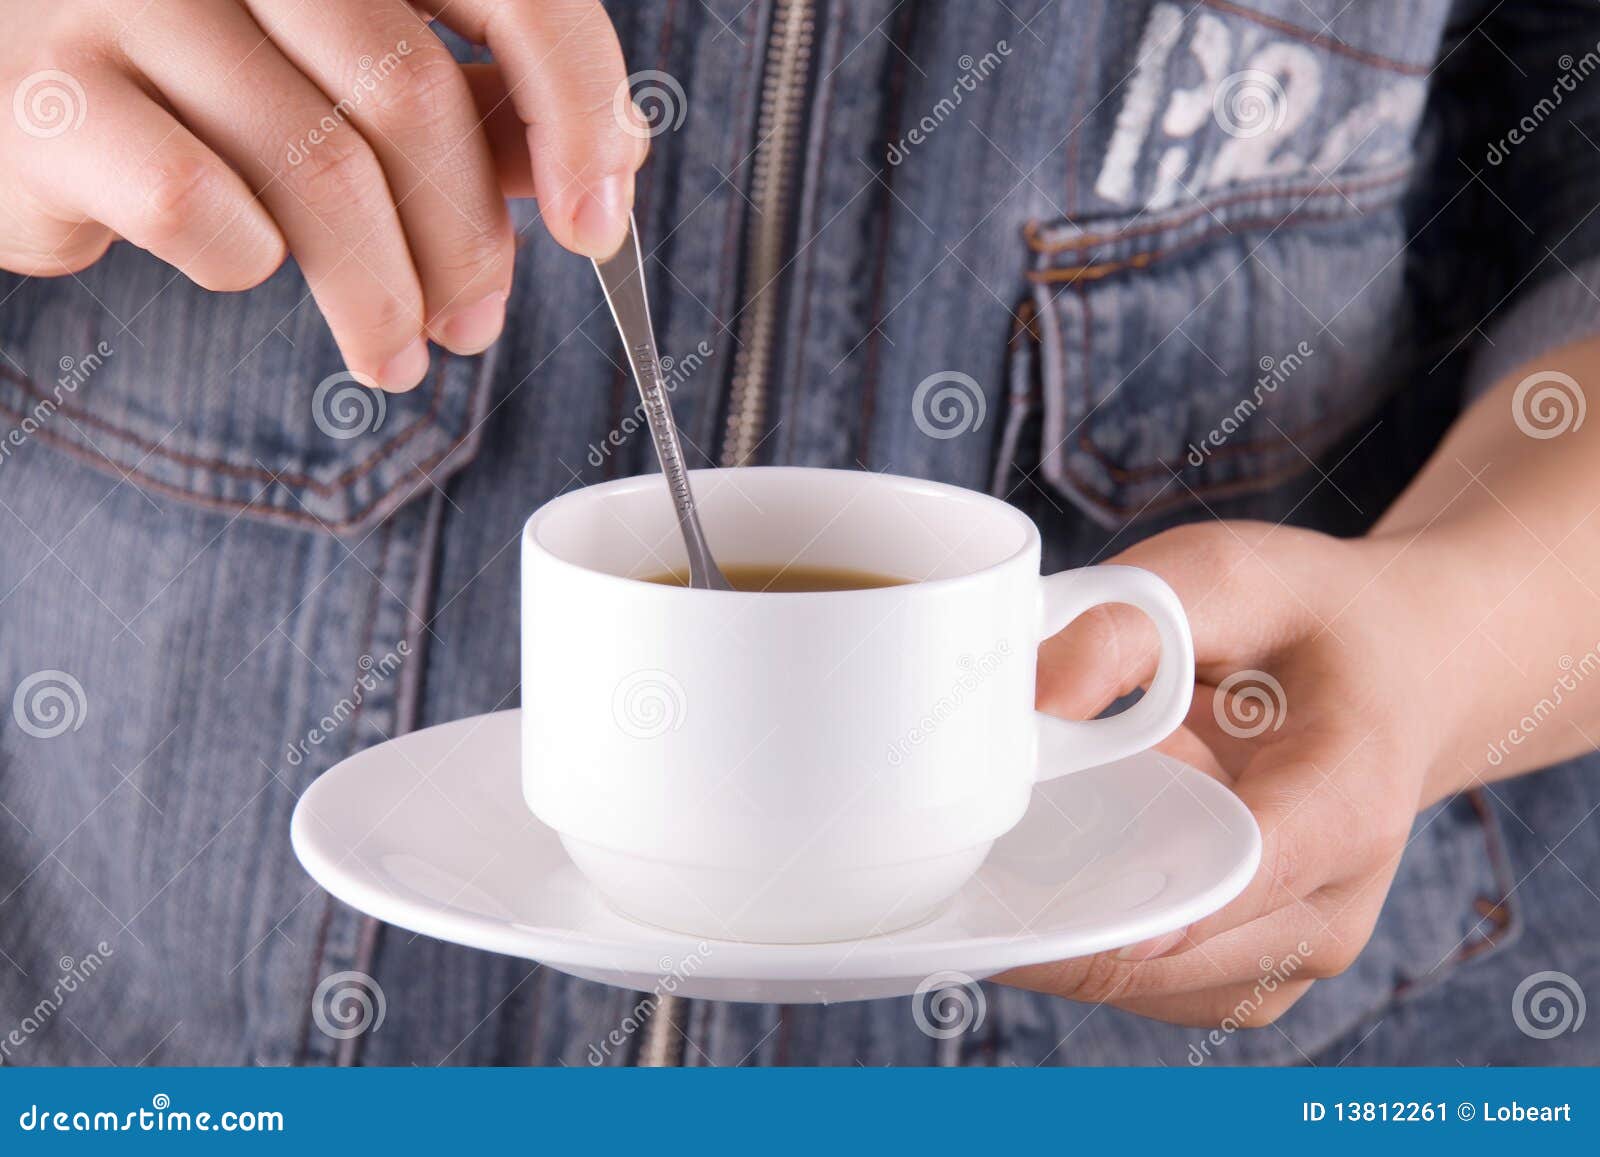 Stir coffee stock image. Image of plate, metal, spoon - 13812261